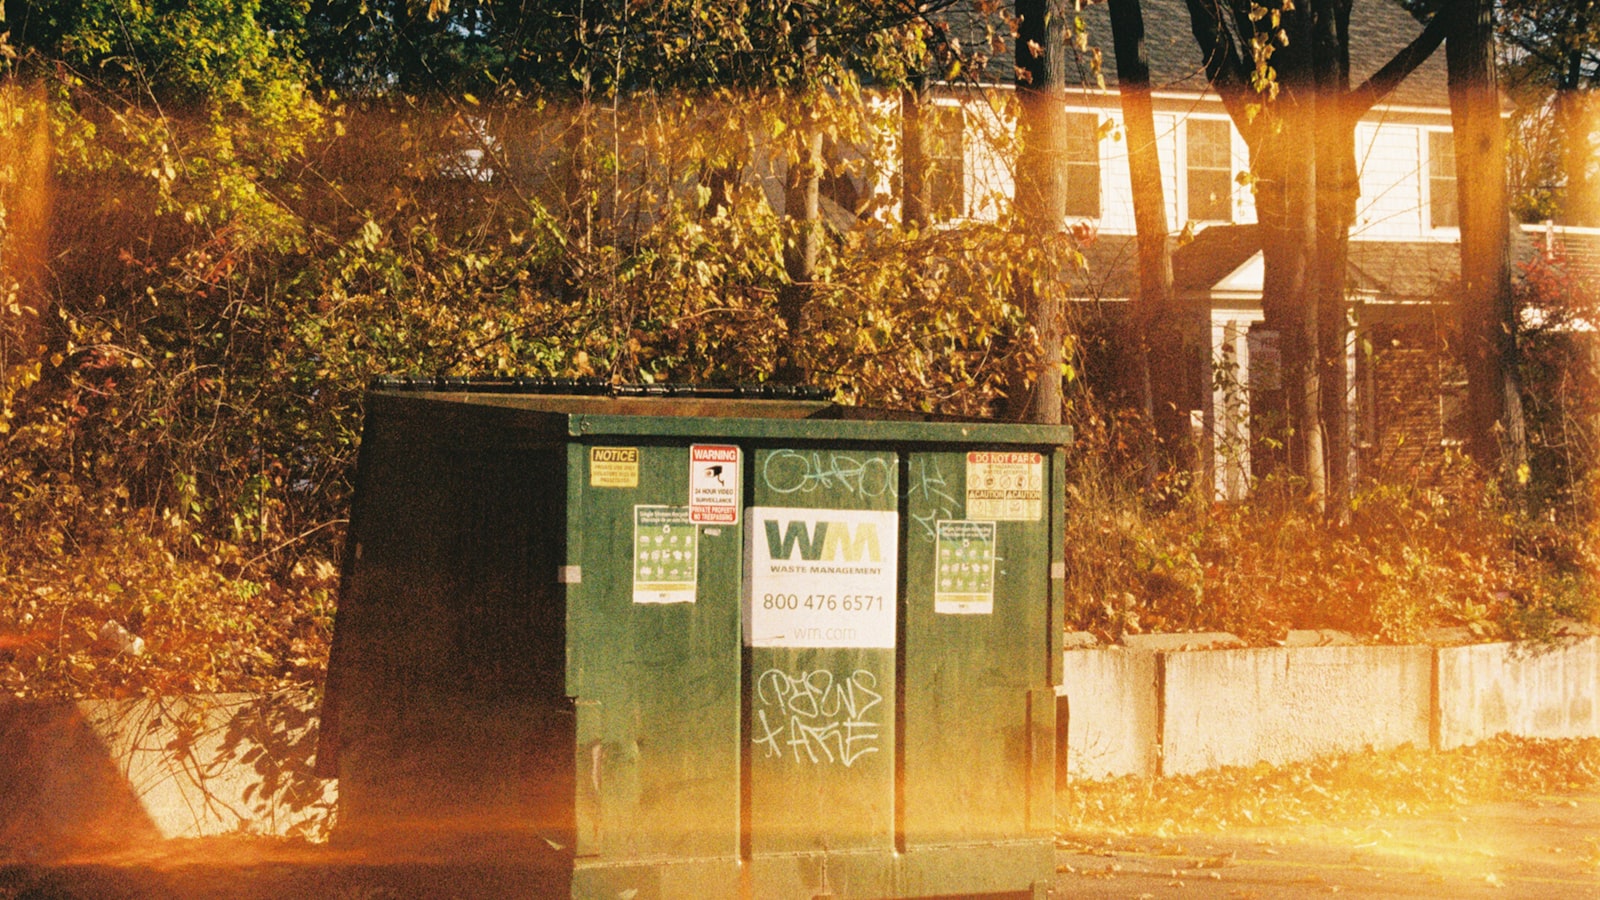 Priority Dumpster Rental Warren Announces New Campaign Focused On Neighborhood Sanitation